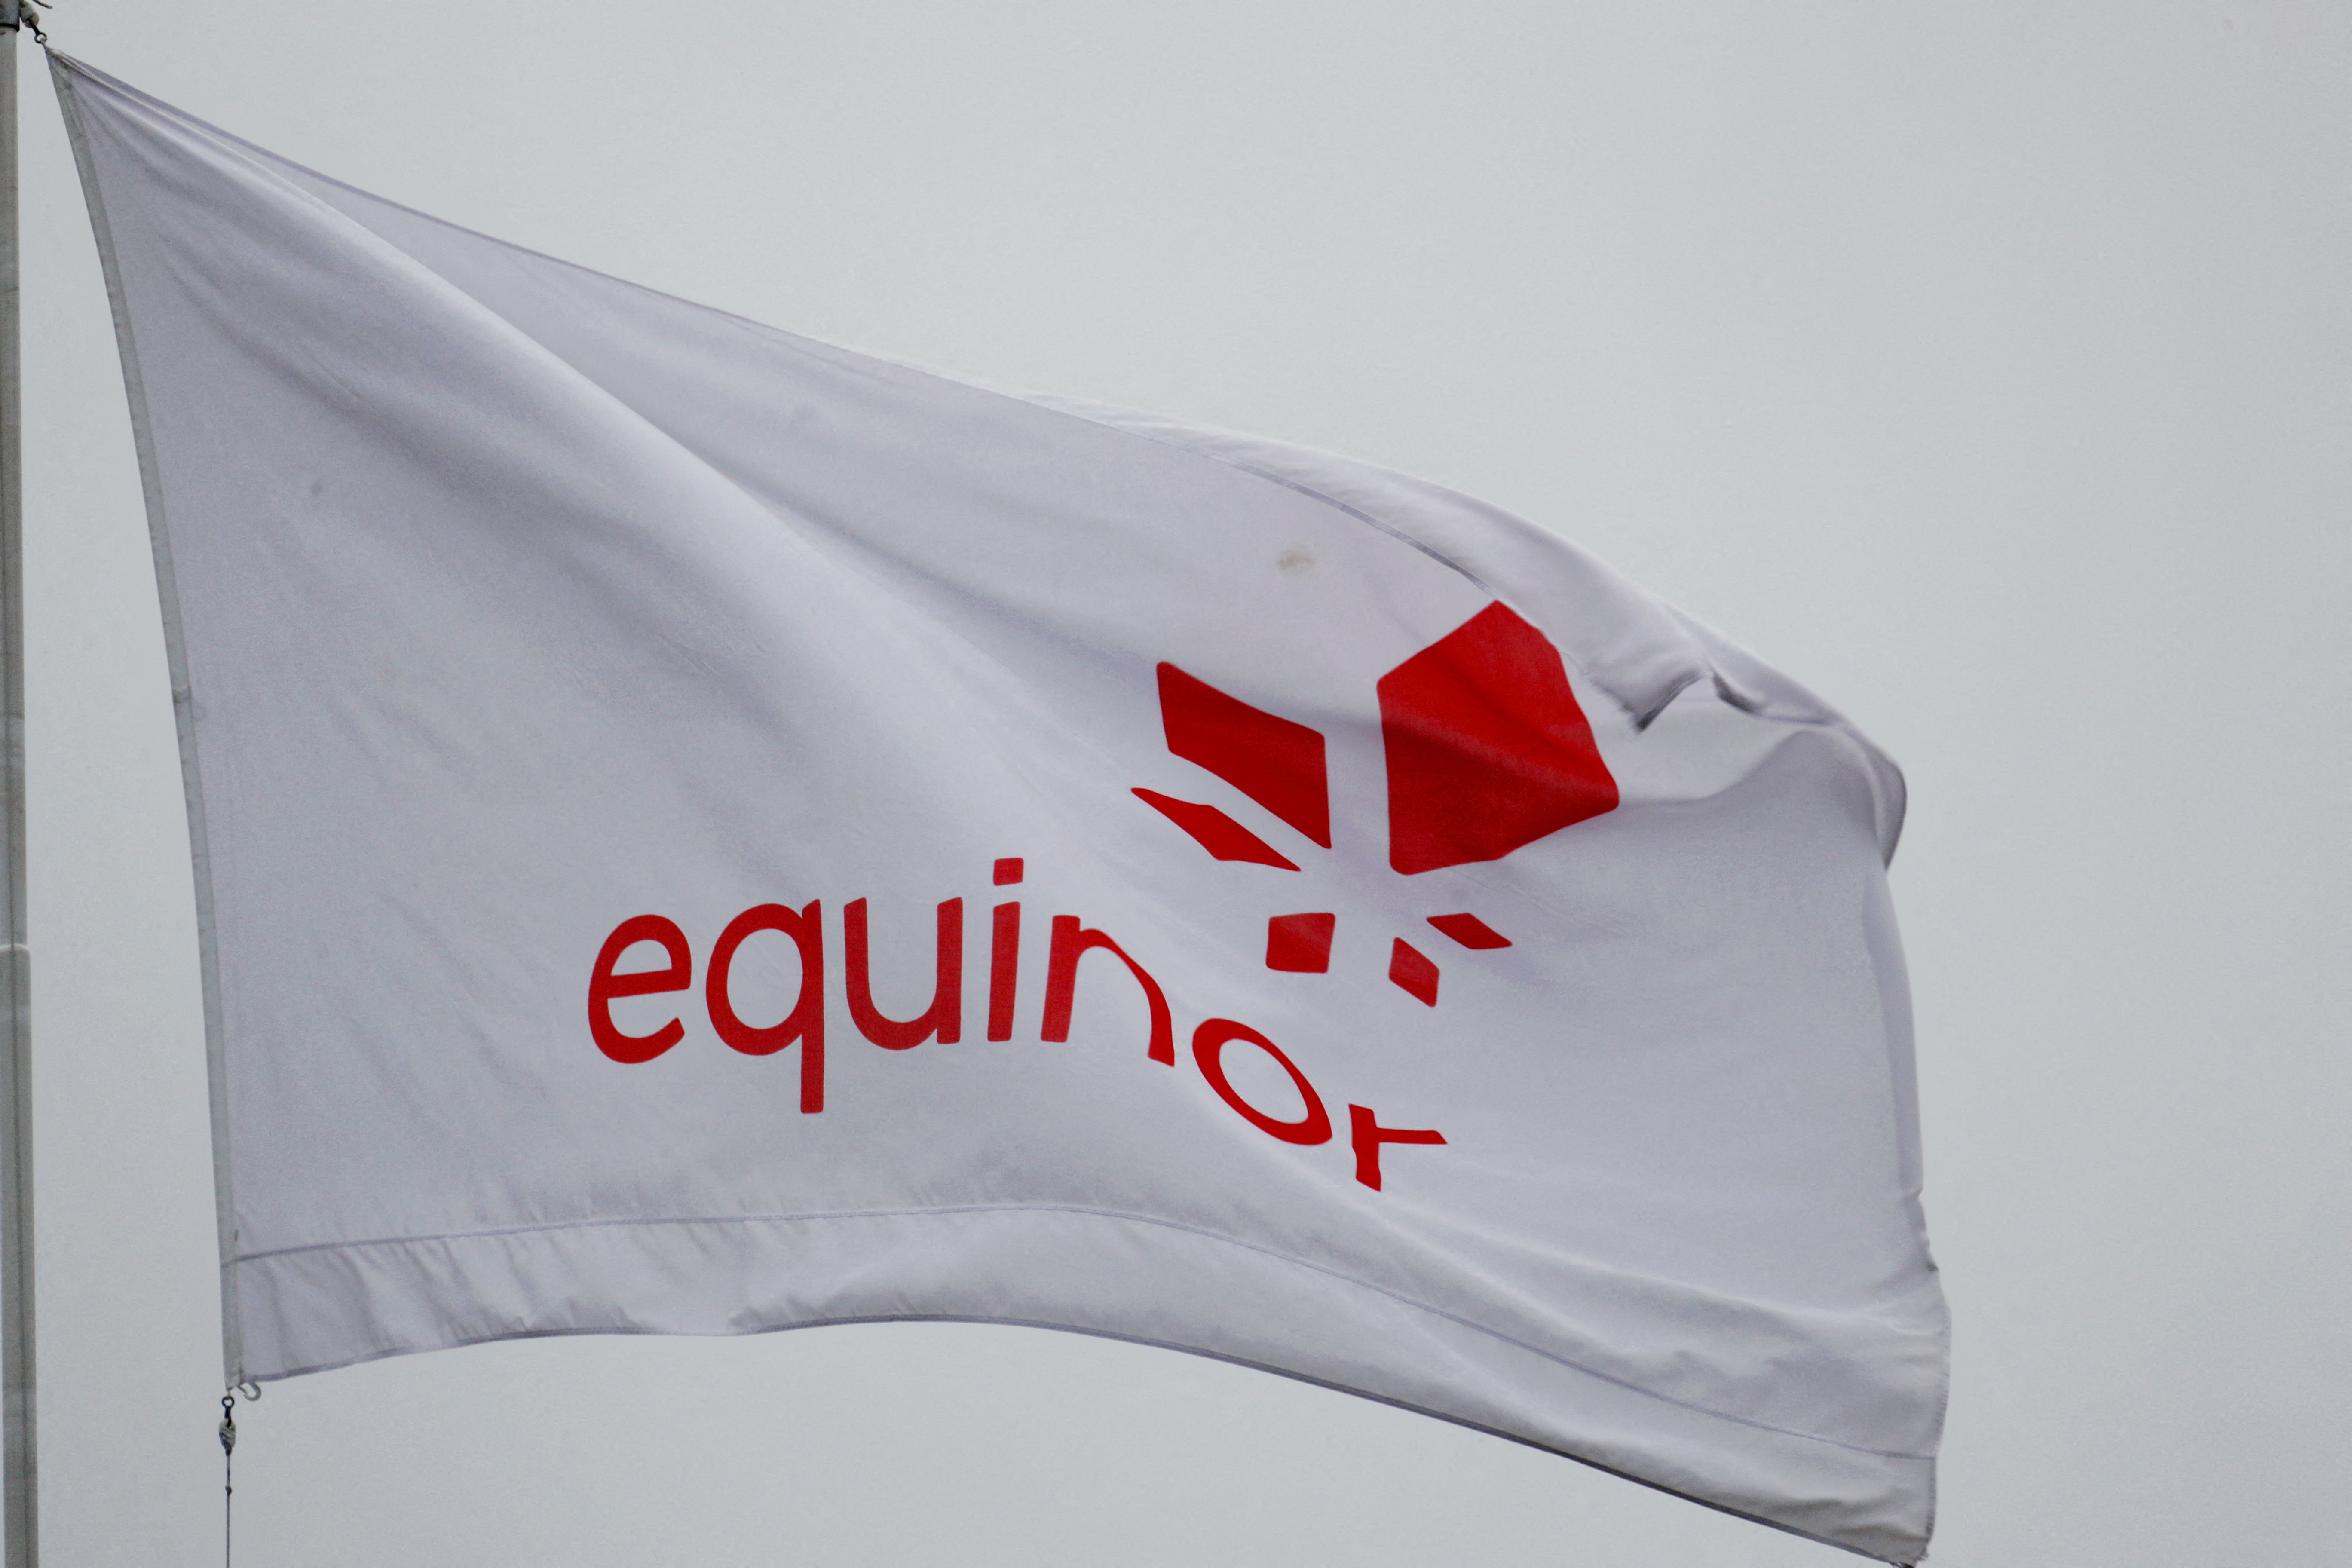 Norwegian energy company Equinor's flag flies at its Stavanger headquarters